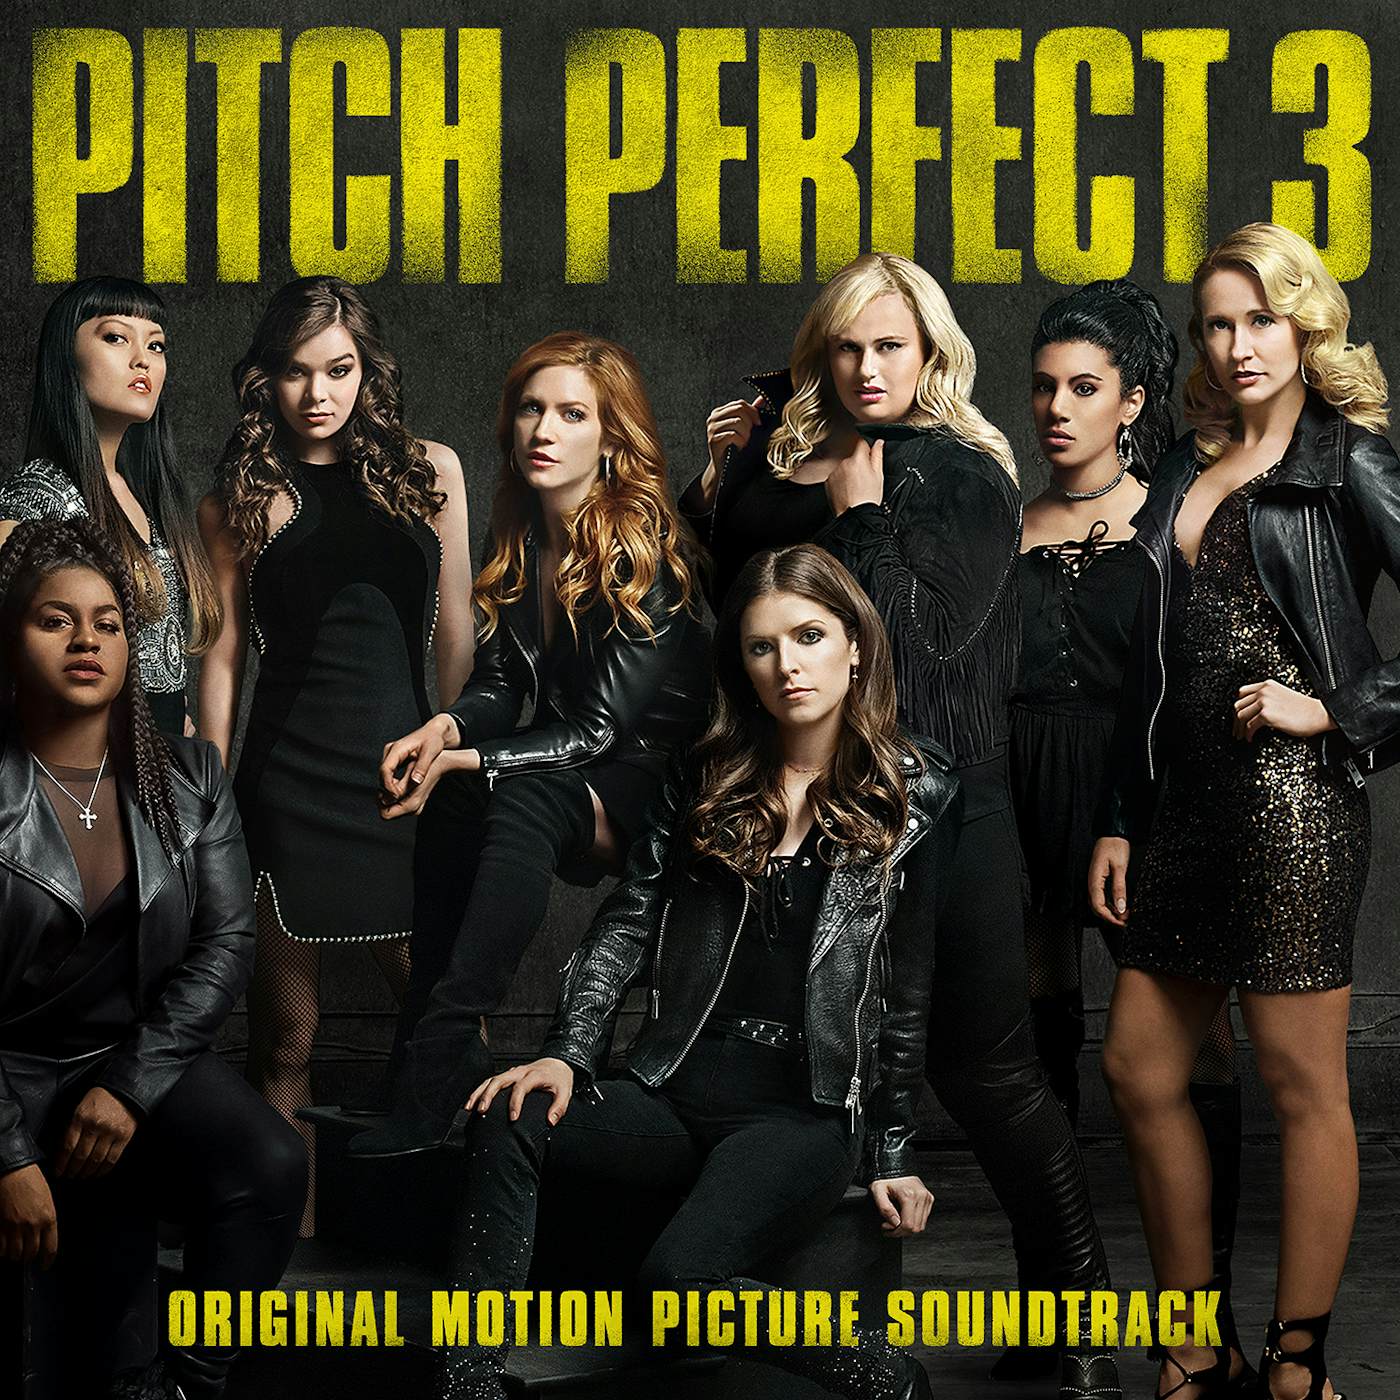 PITCH PERFECT 3 / Original Soundtrack CD